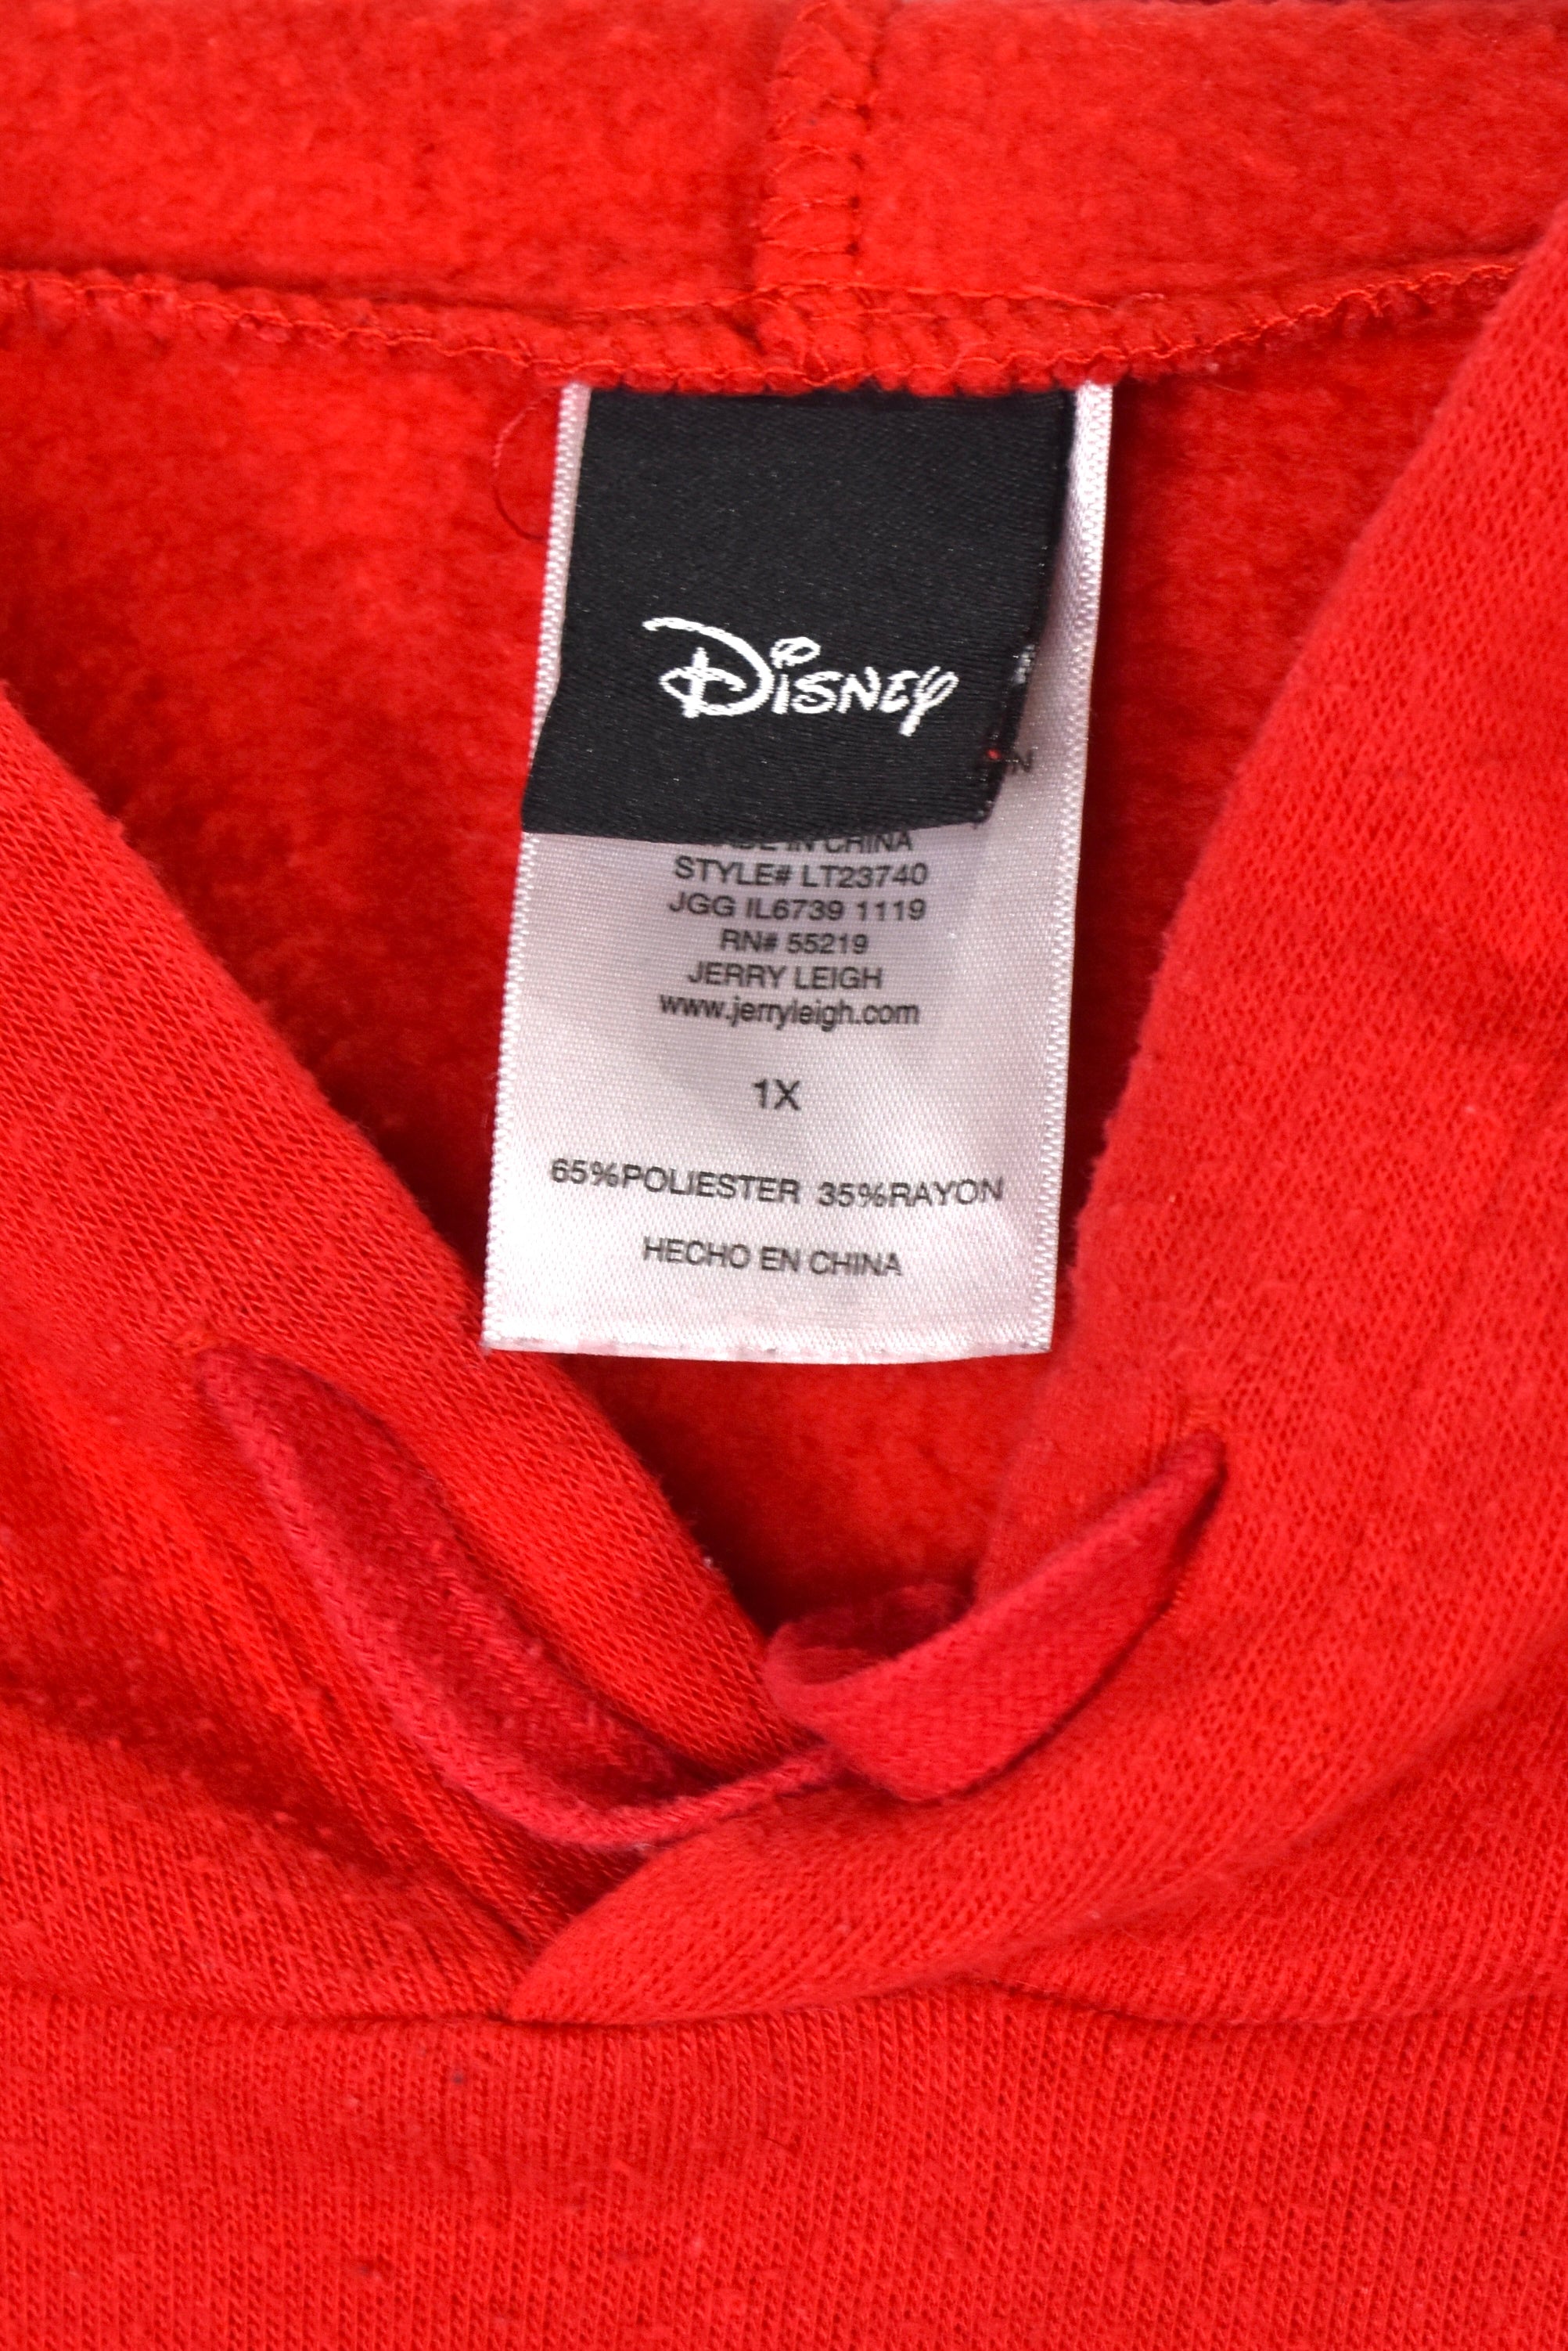 Women's modern Mickey Mouse hoodie (XL), red Disney graphic sweatshirt